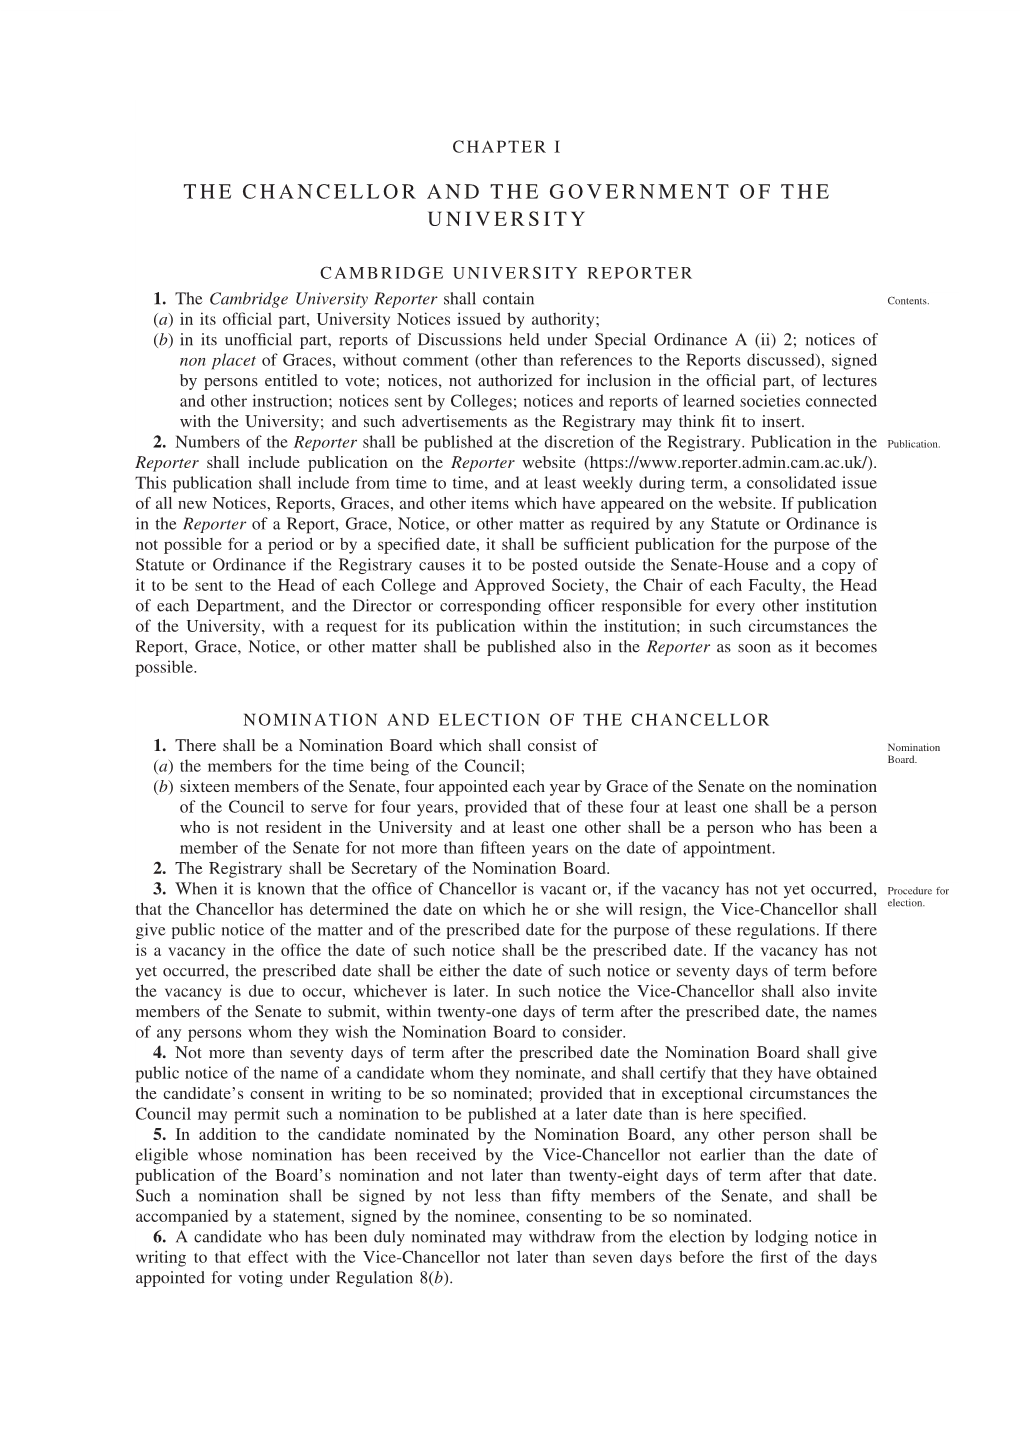 Statutes and Ordinances of the University of Cambridge